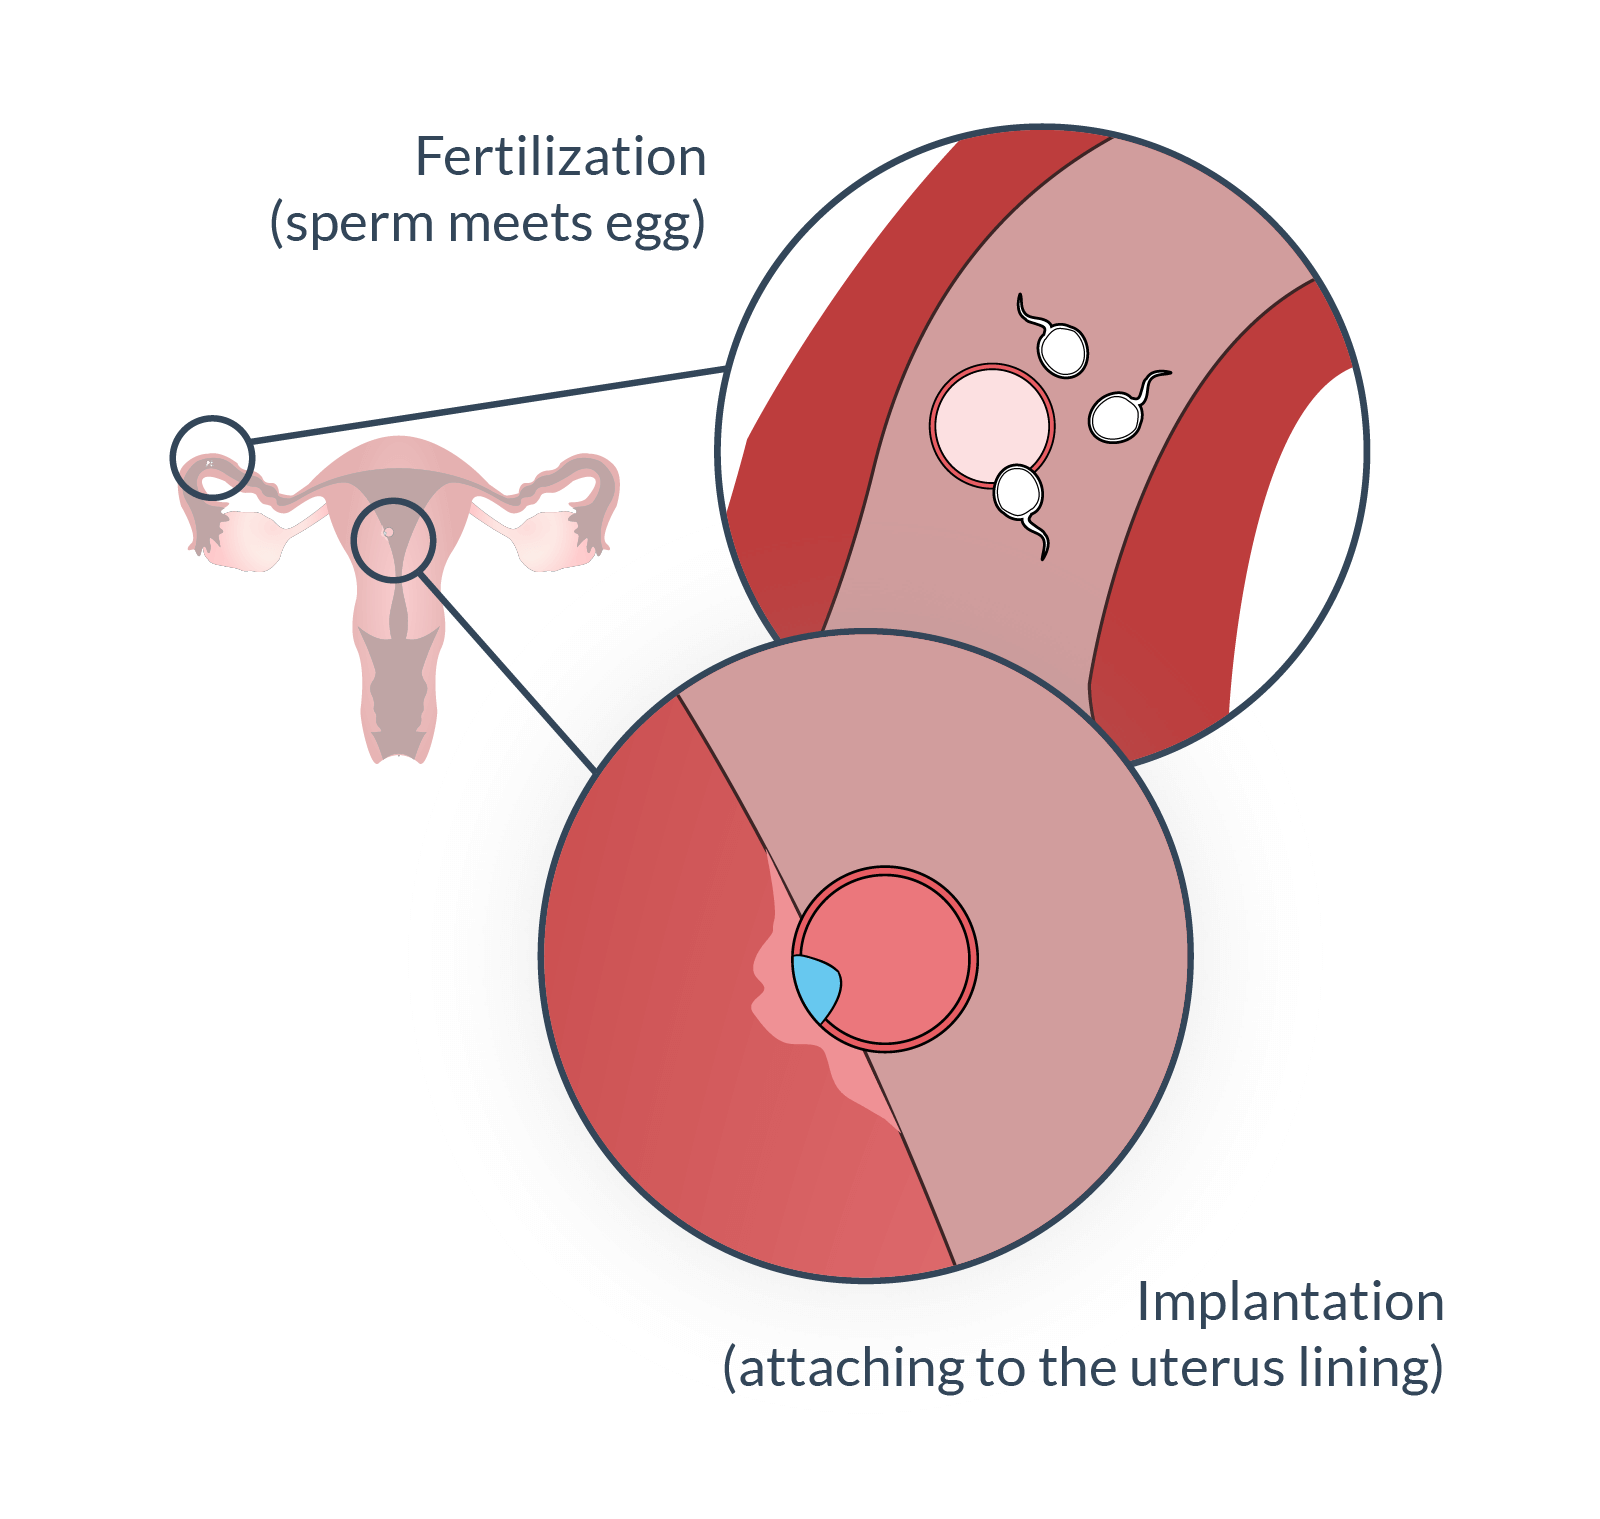 Fertilization and implantation after ovulation